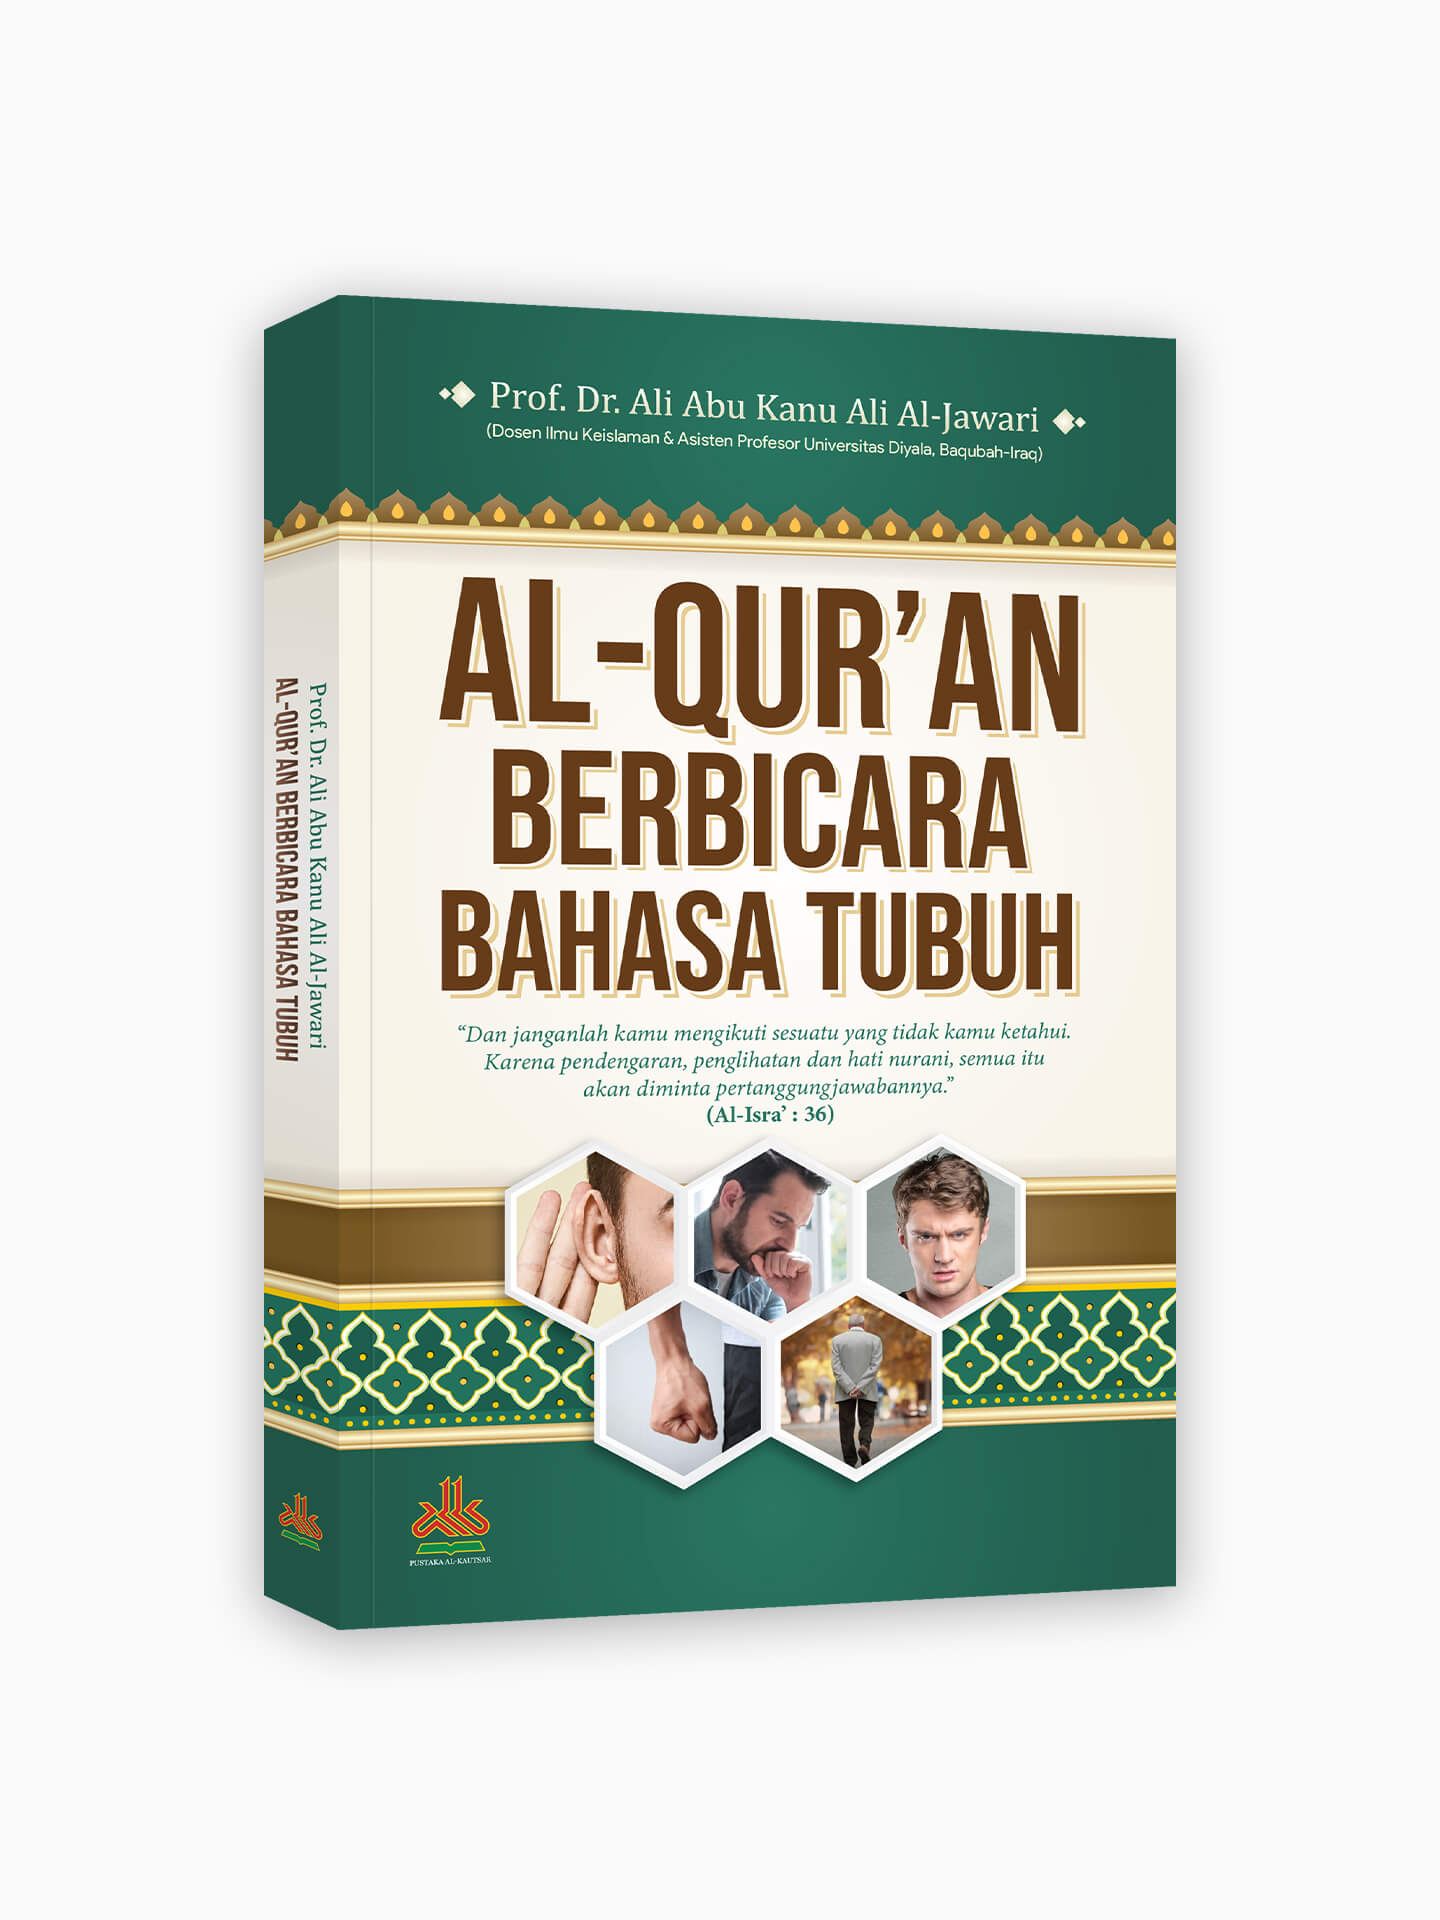 Al-Qur'an Berbicara Bahasa Tubuh